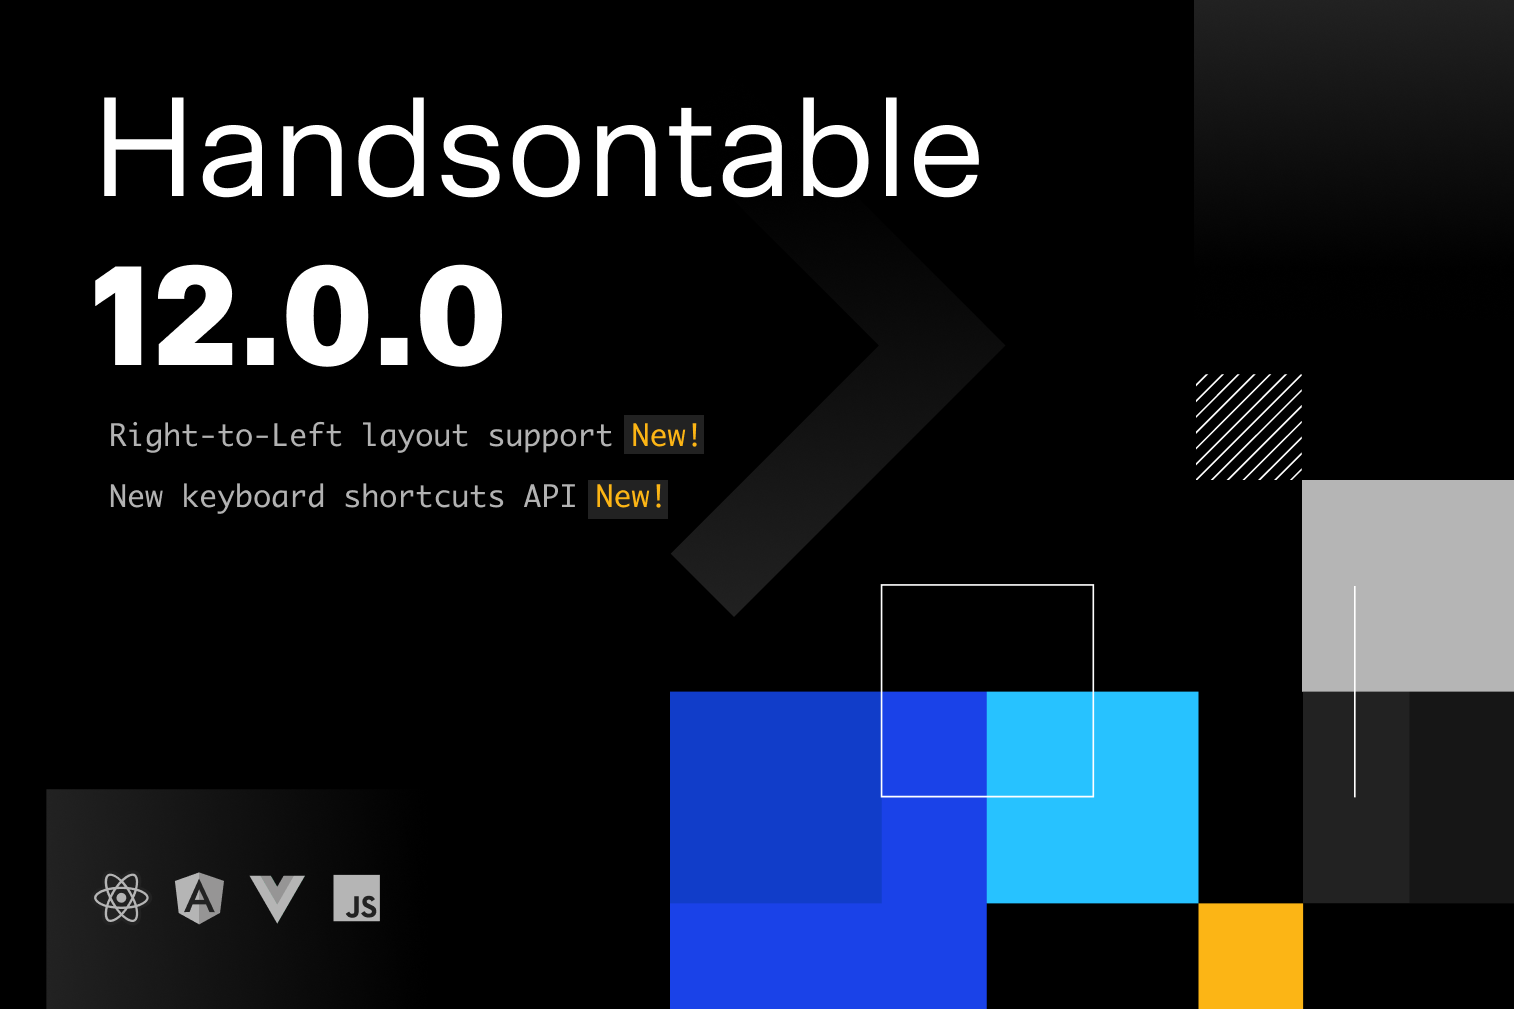 Handsontable 12.0.0 release